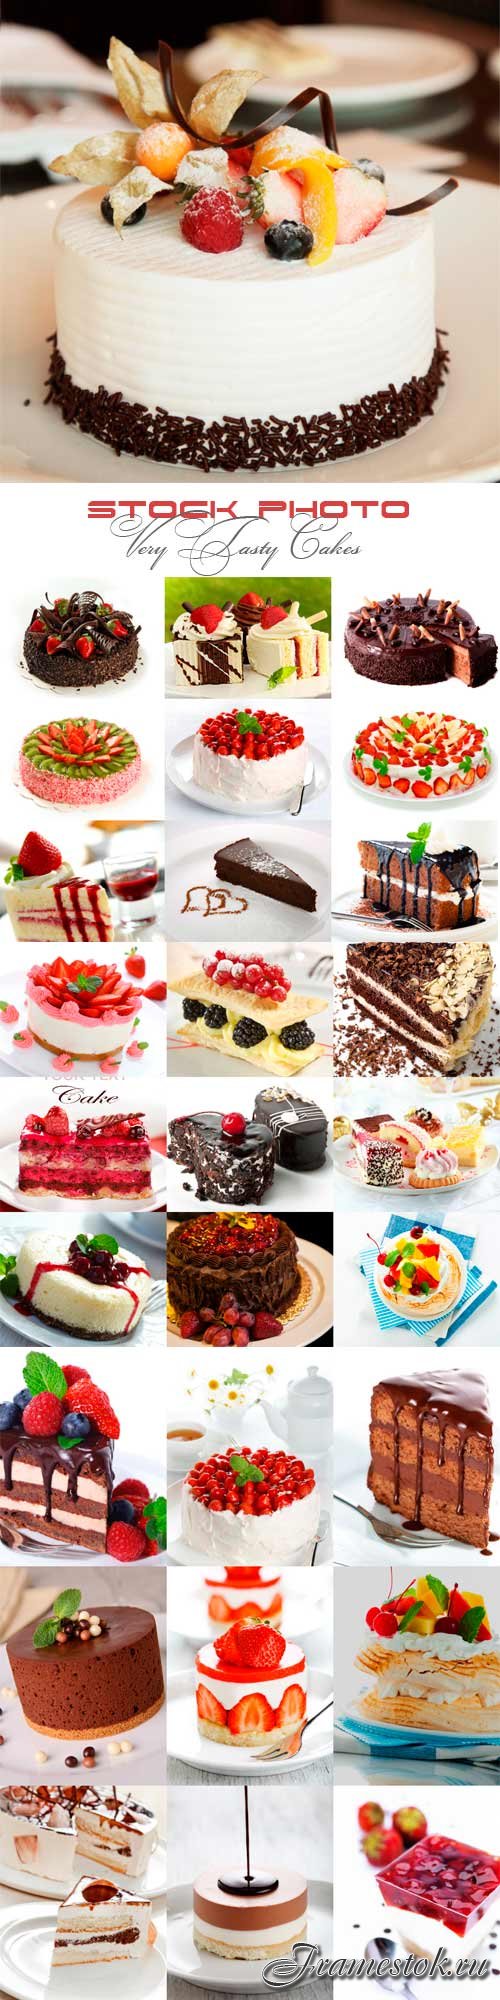 Very tasty cakes raster graphics